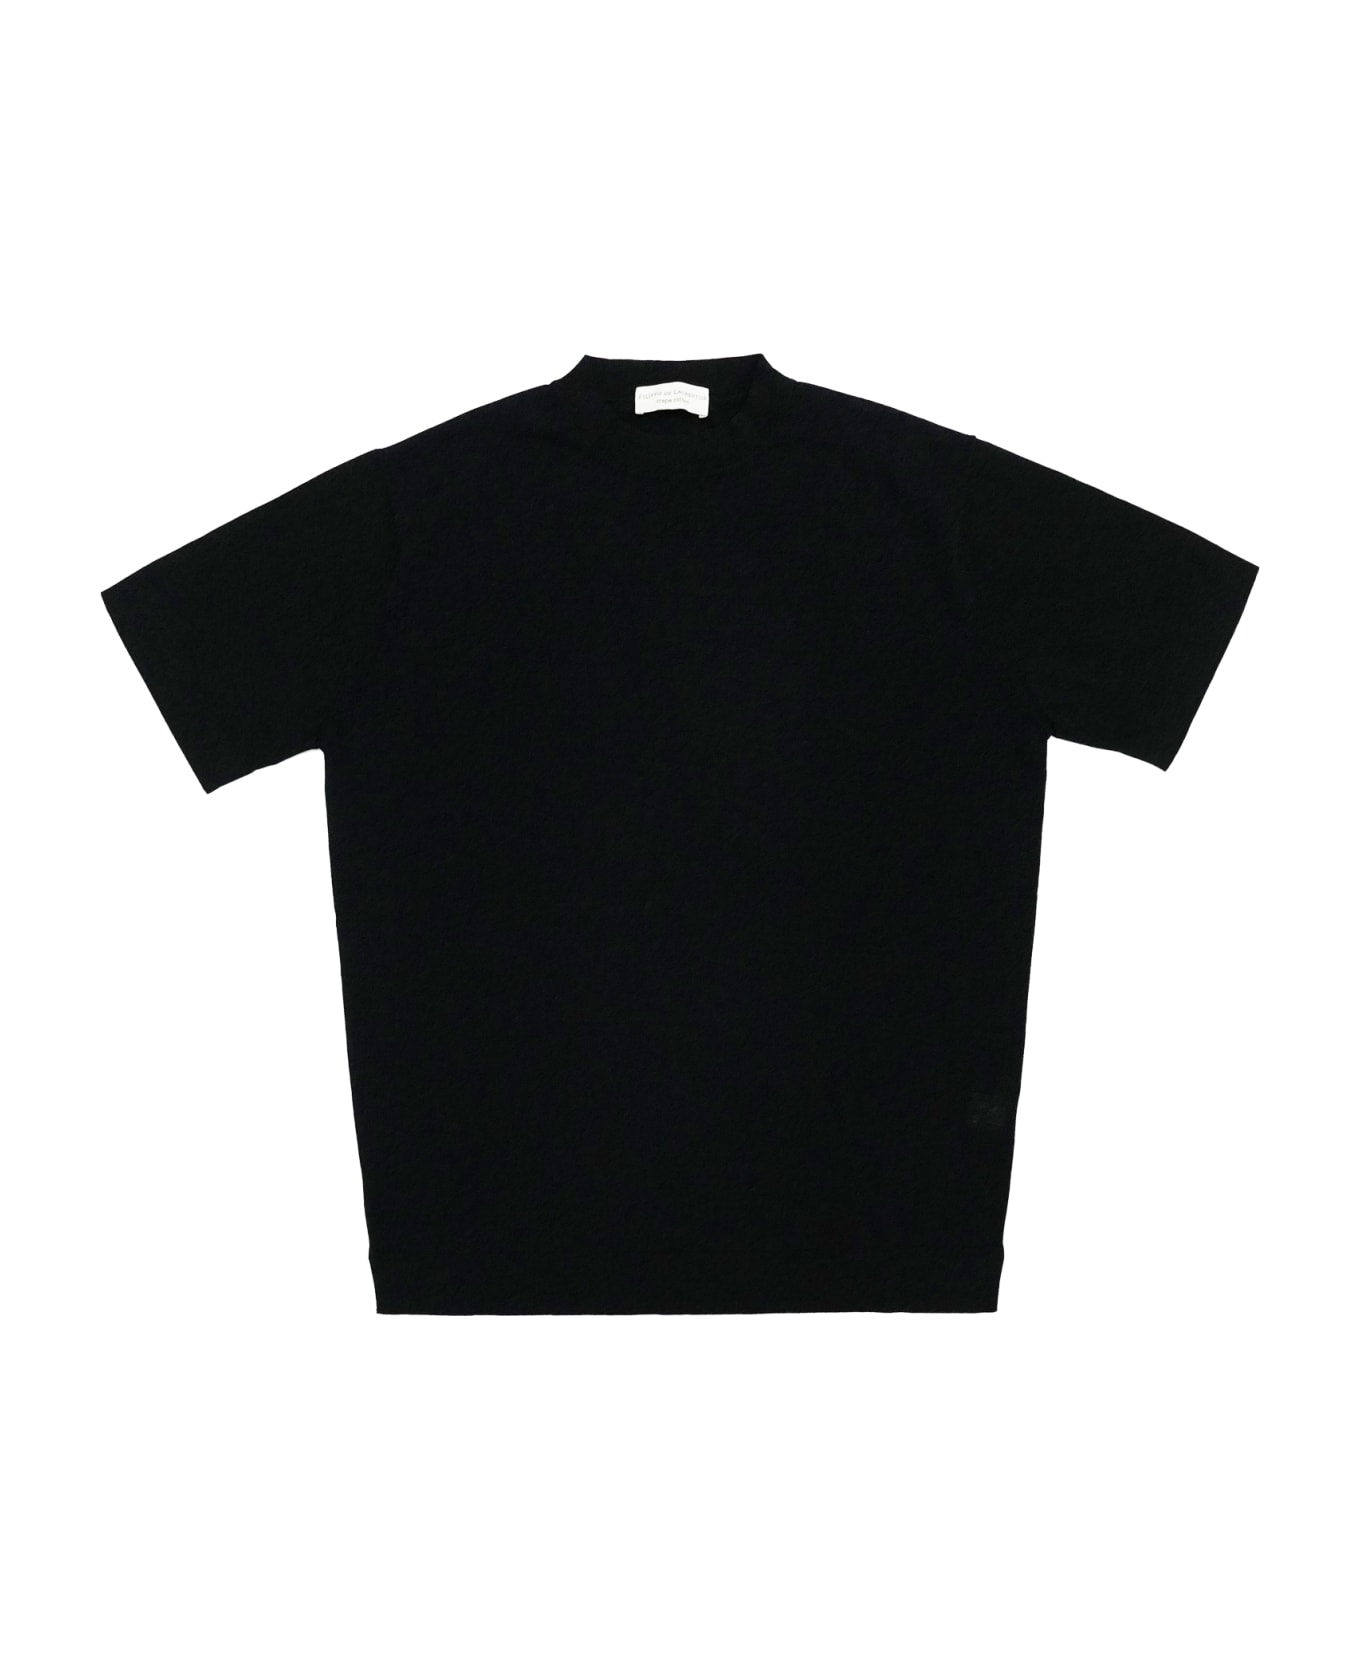 Filippo De Laurentiis T-shirt - Black